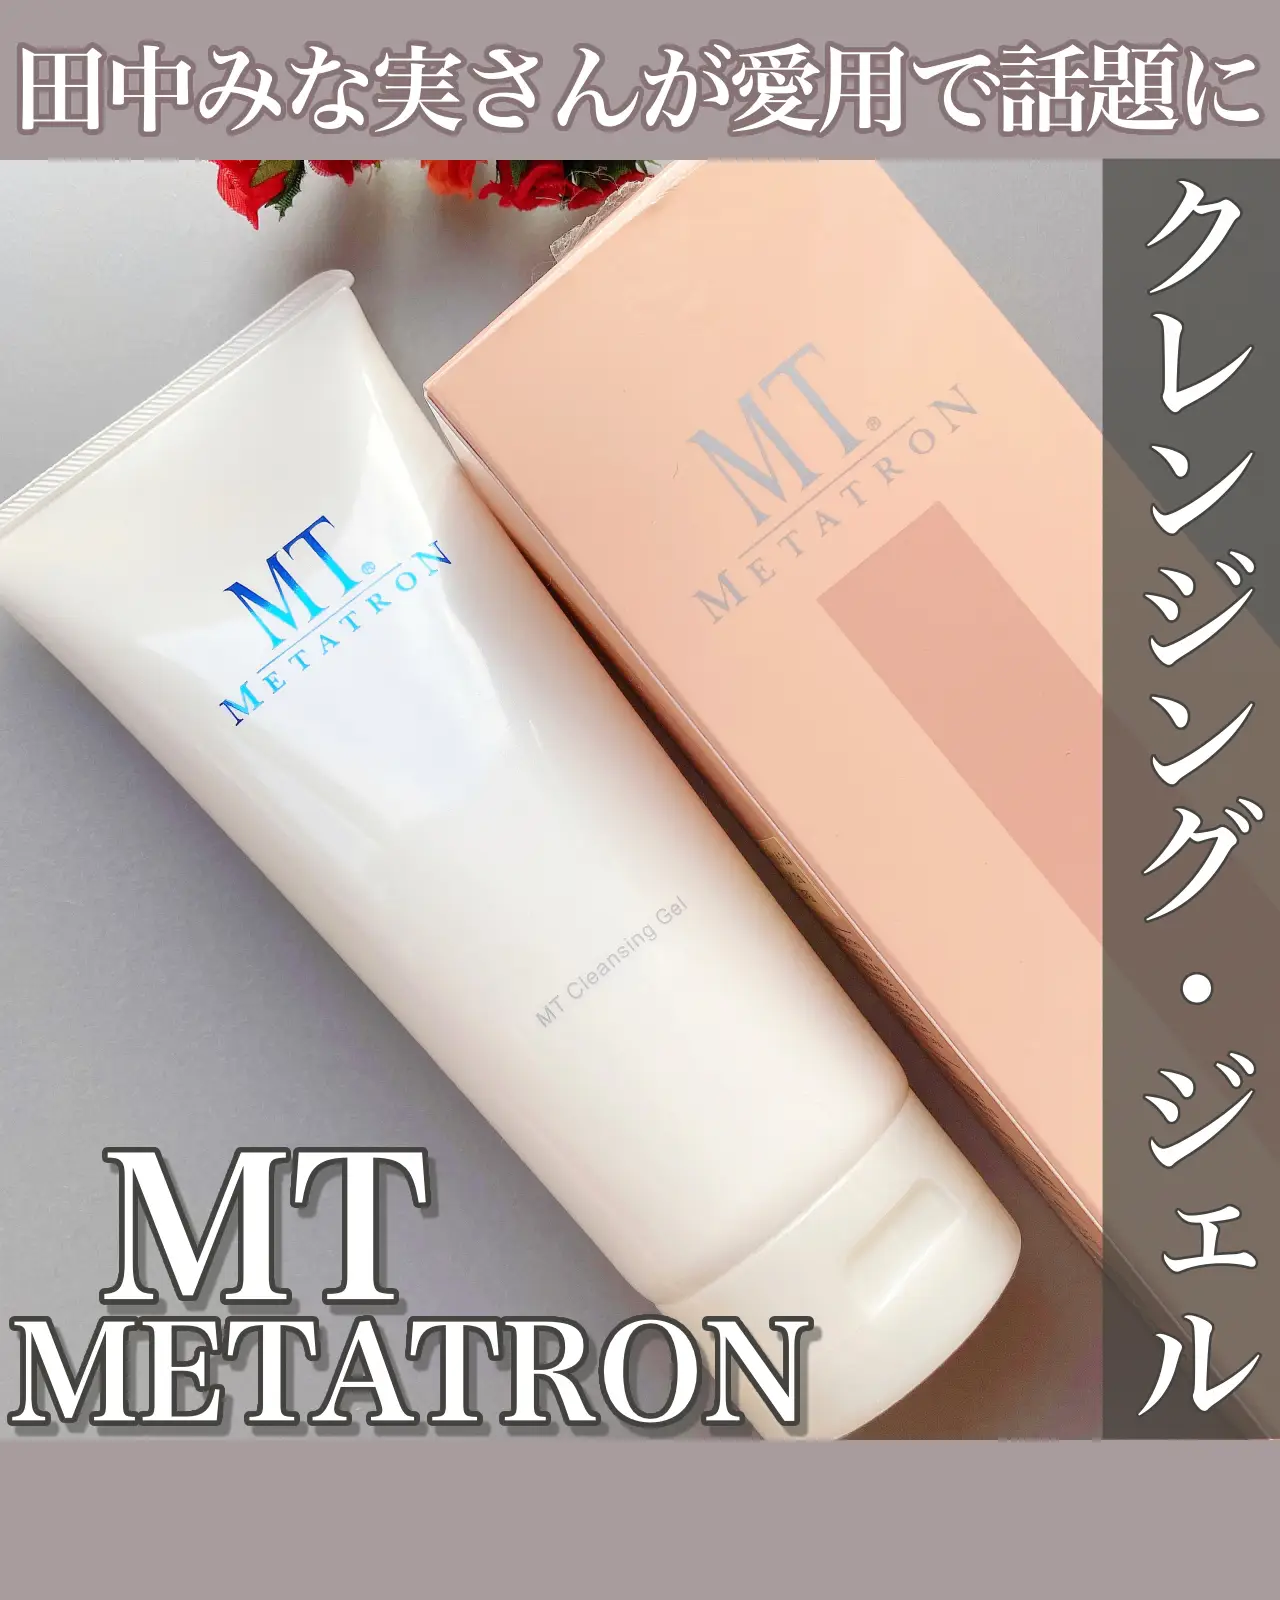 Mtメタトロン - Lemon8検索